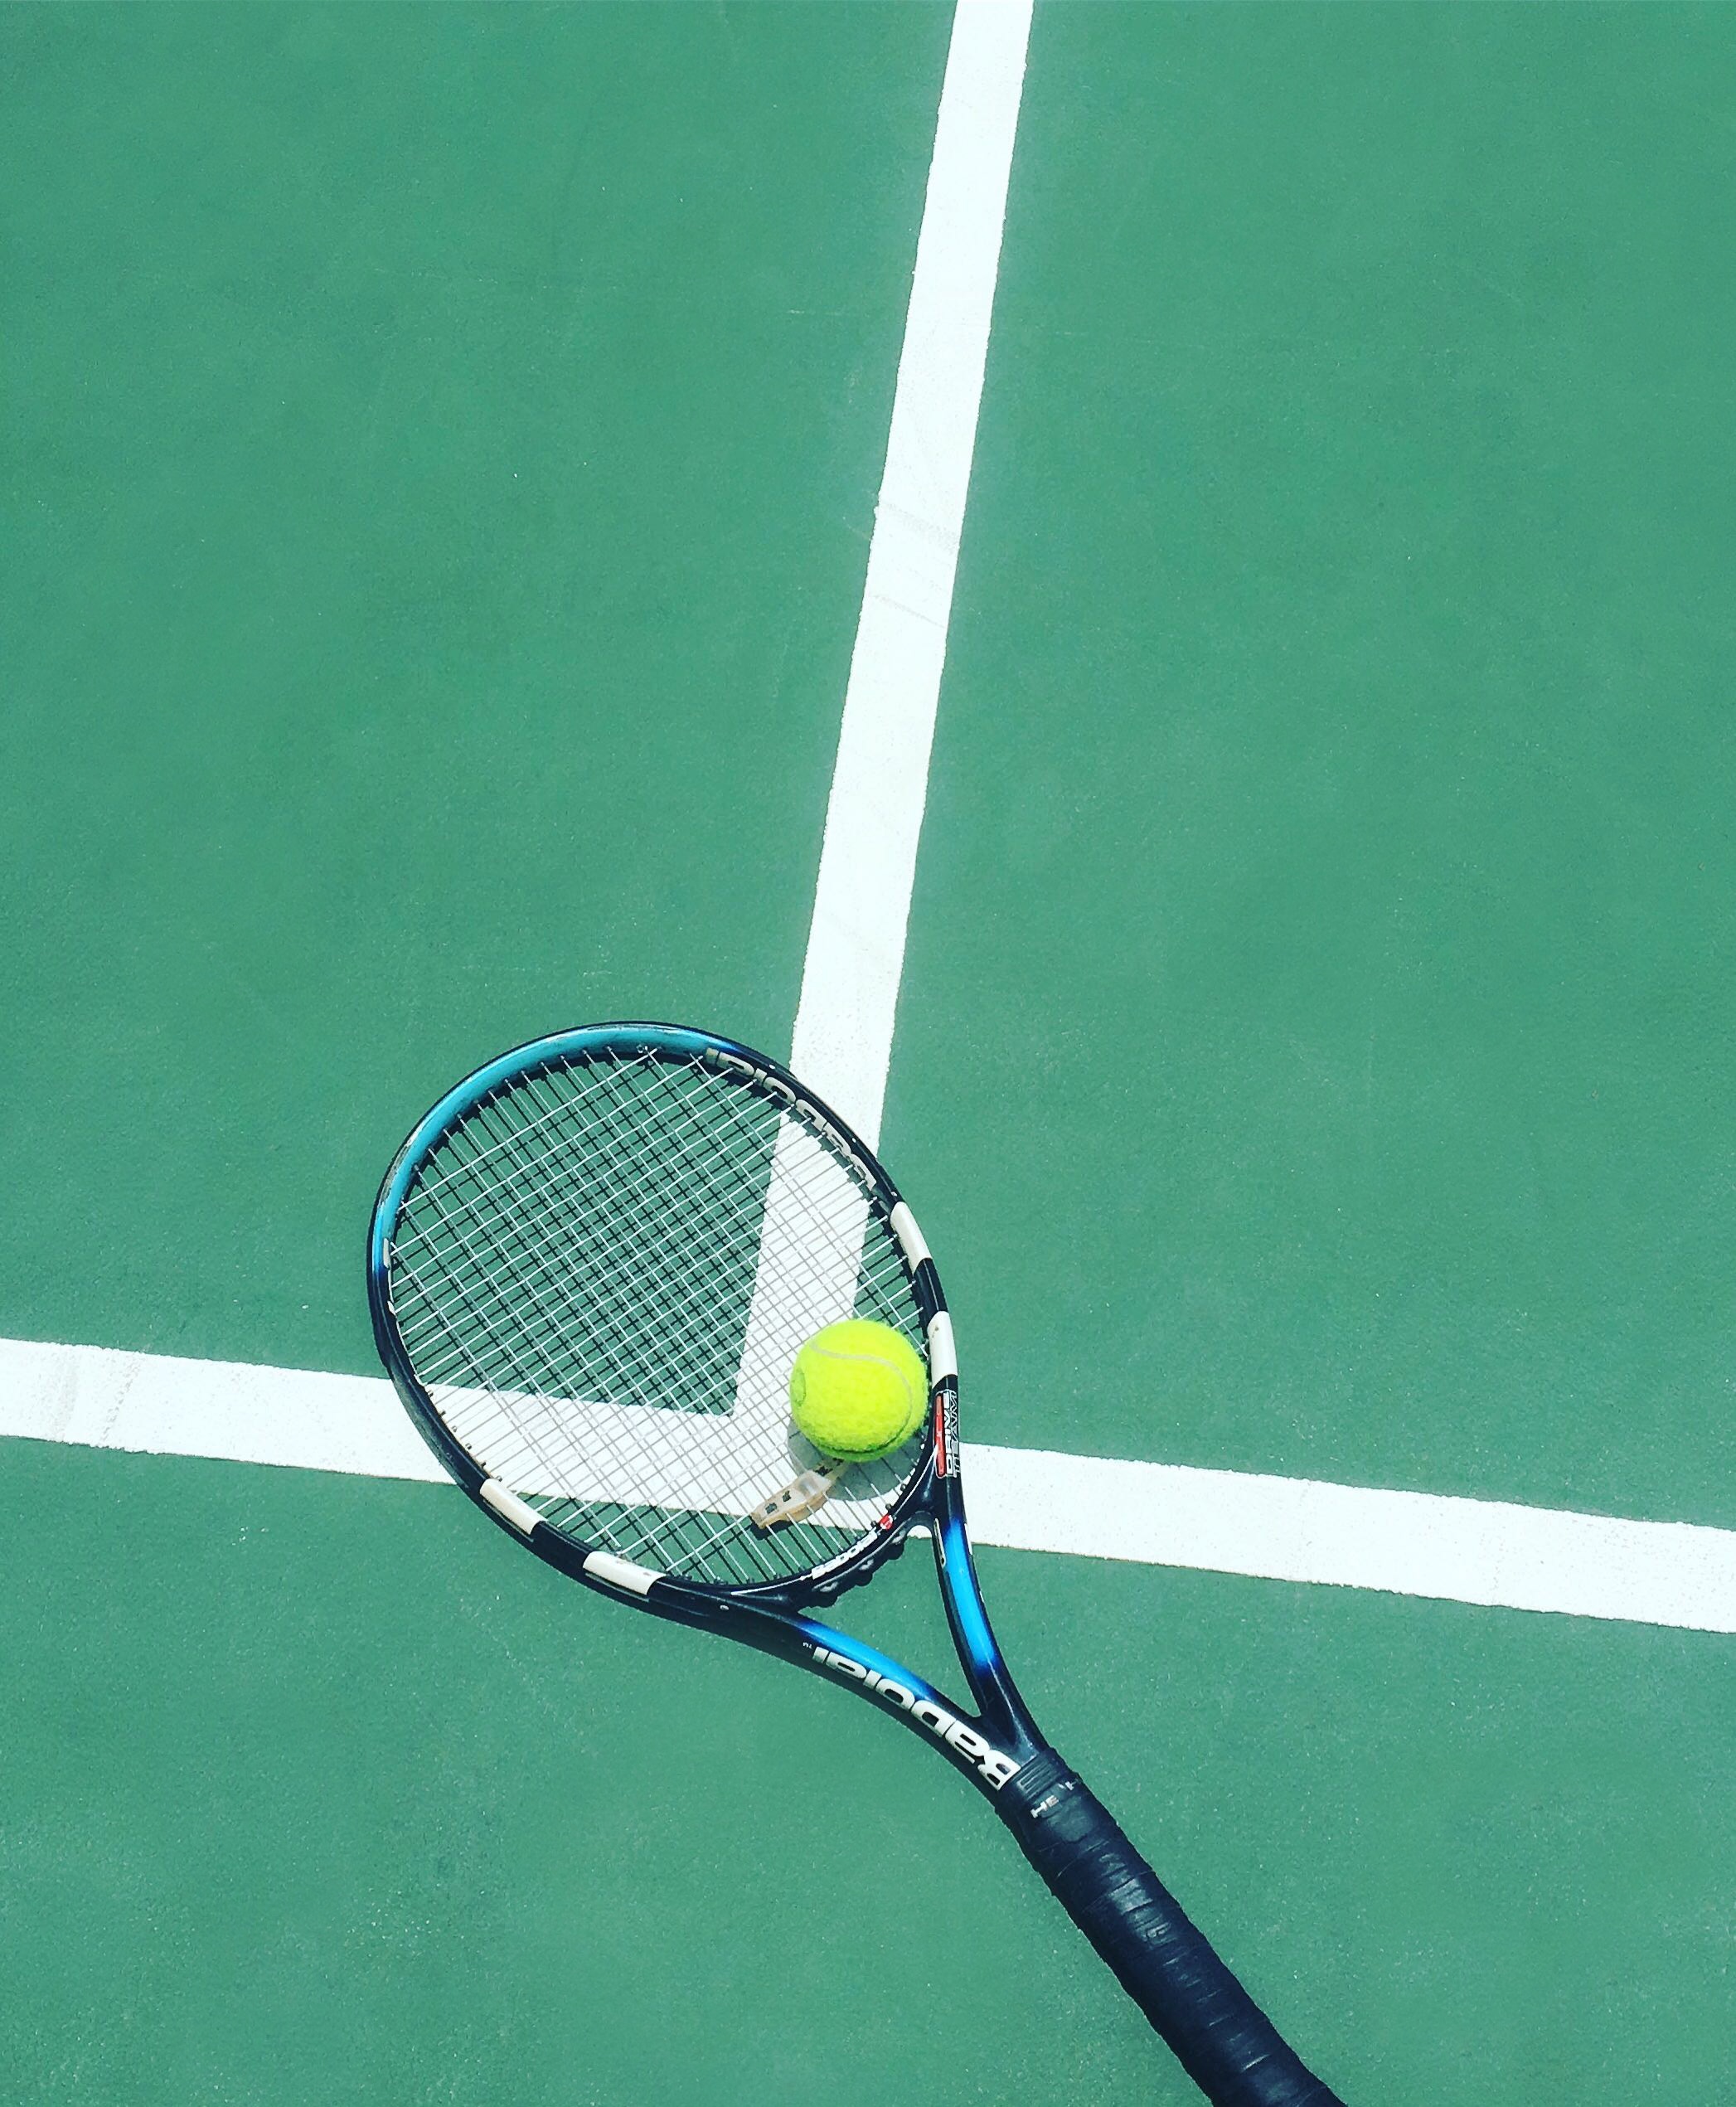 Tennis racket on court